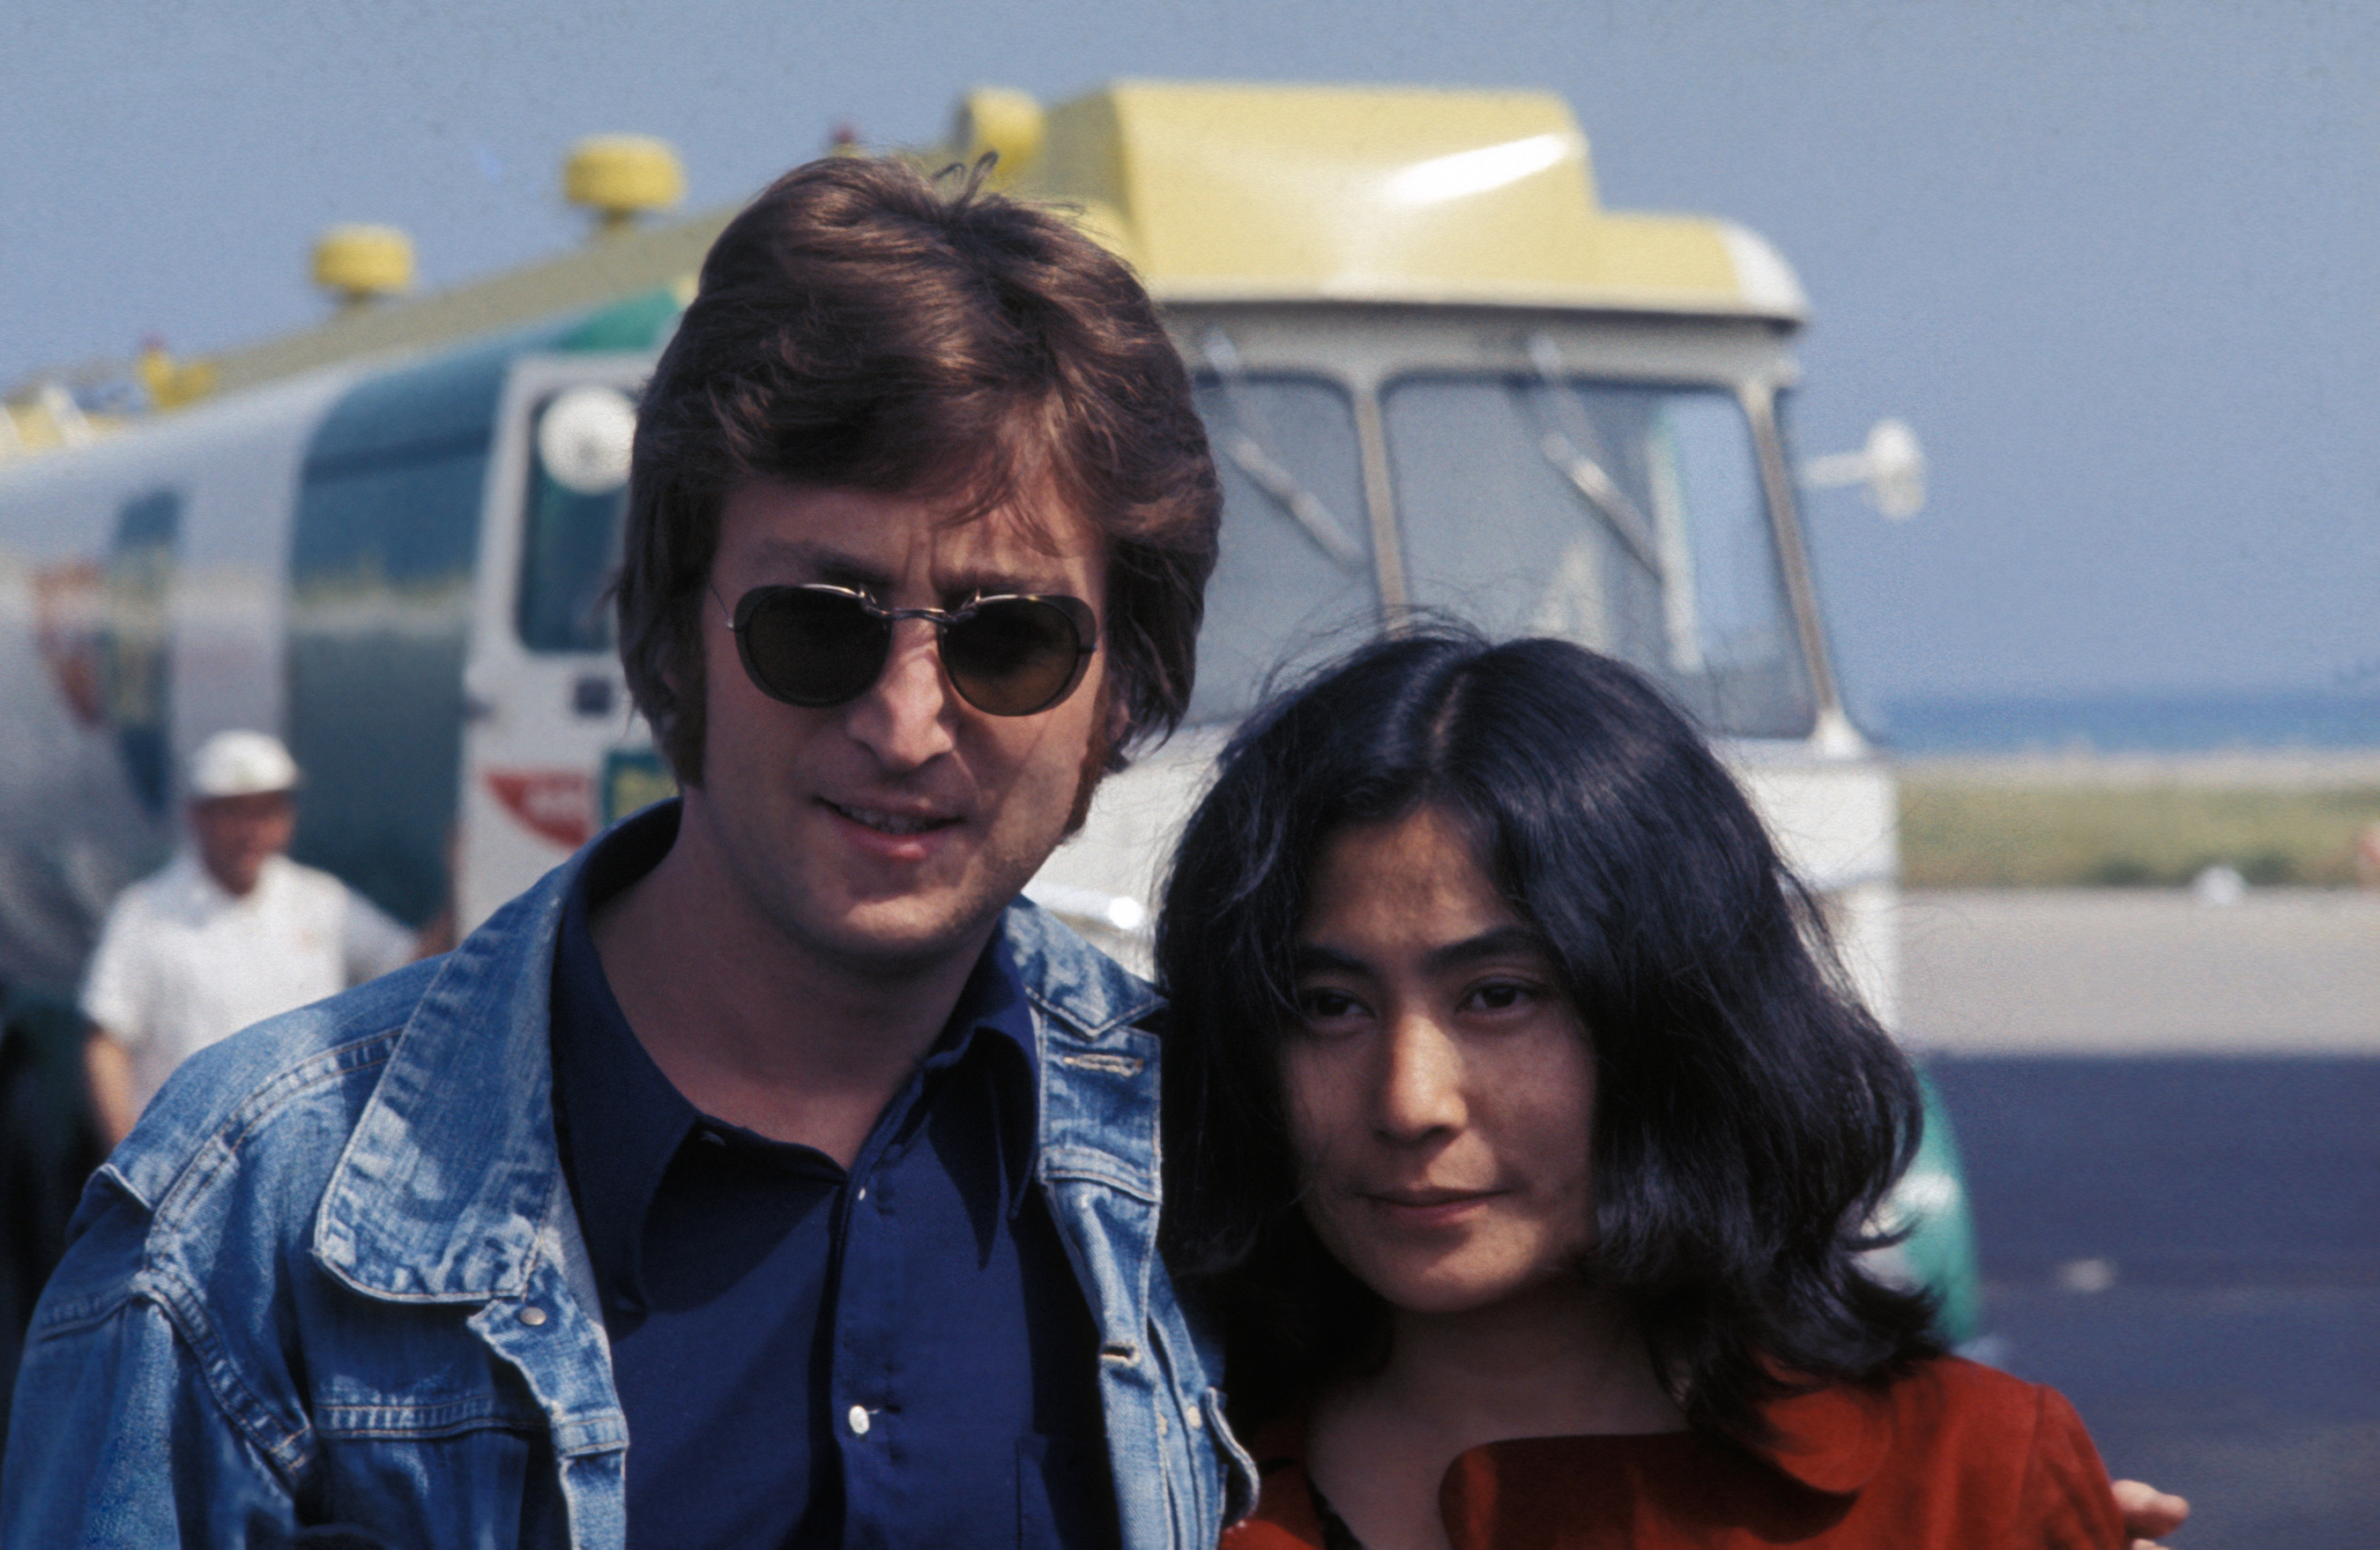 John Lennon and Yoko Ono, circa 1970. (Photo by BREUER/Gamma-Rapho via Getty Images)